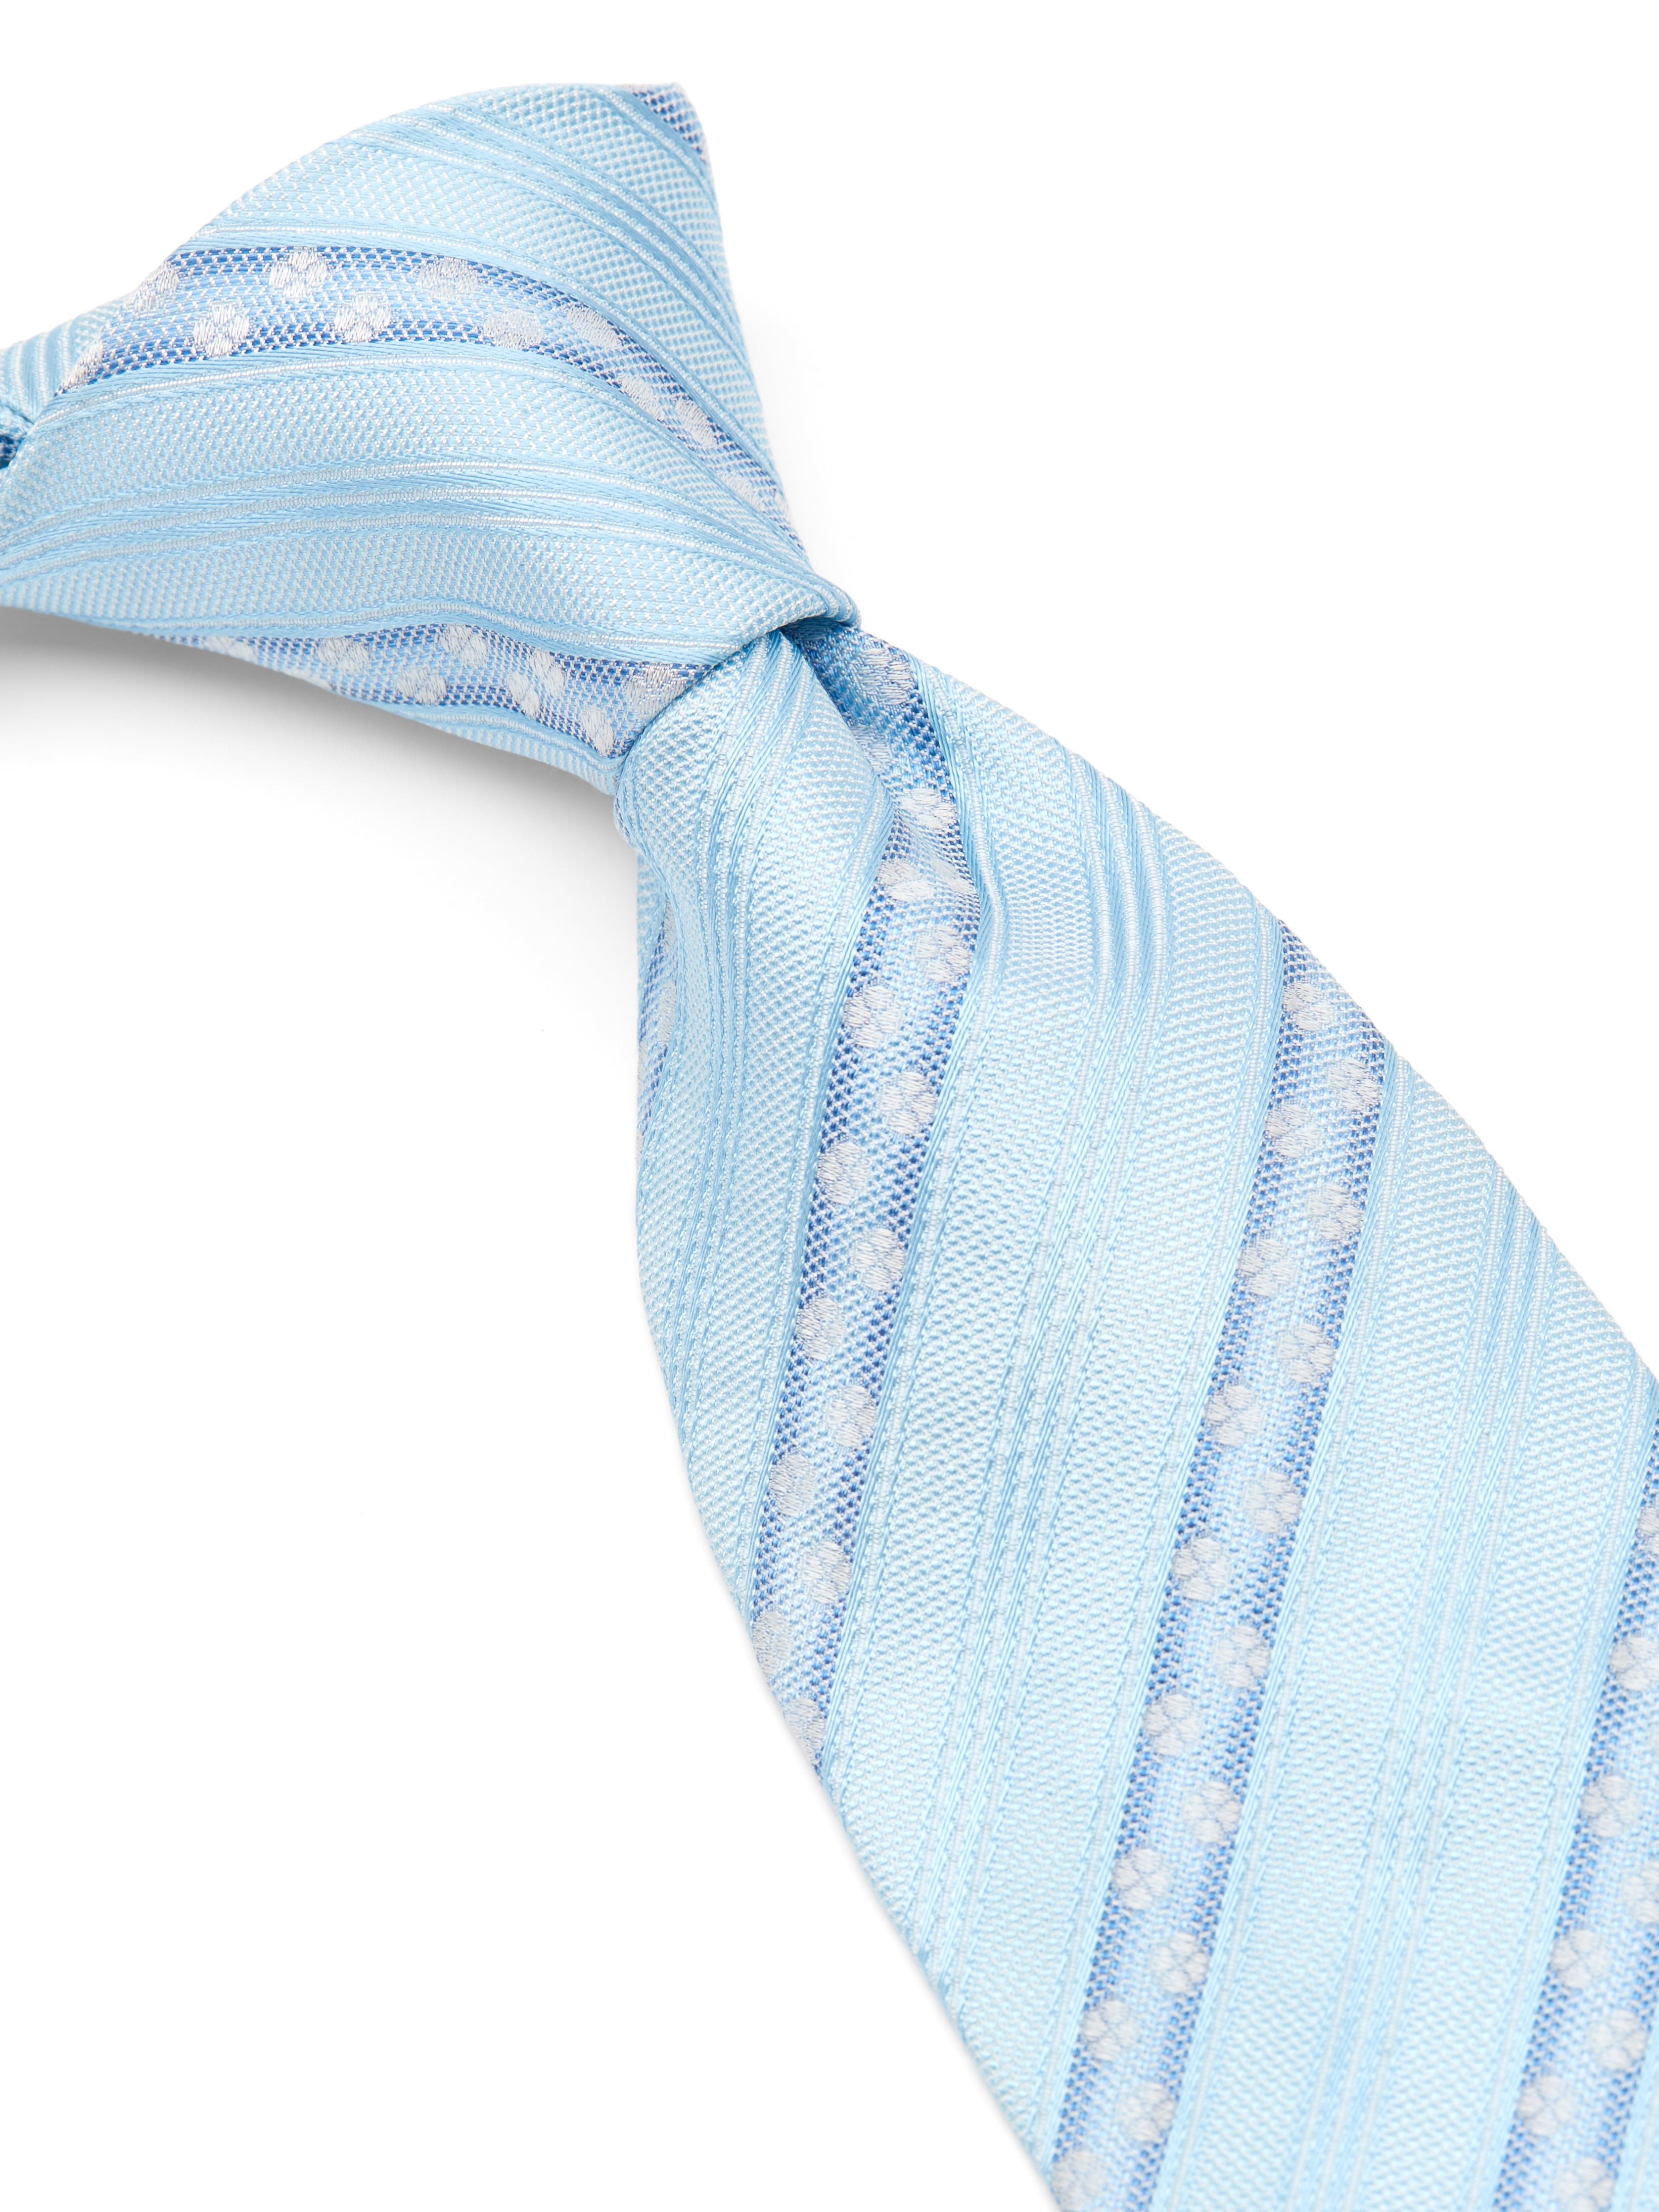 Blue Hawksworth Silk Tie